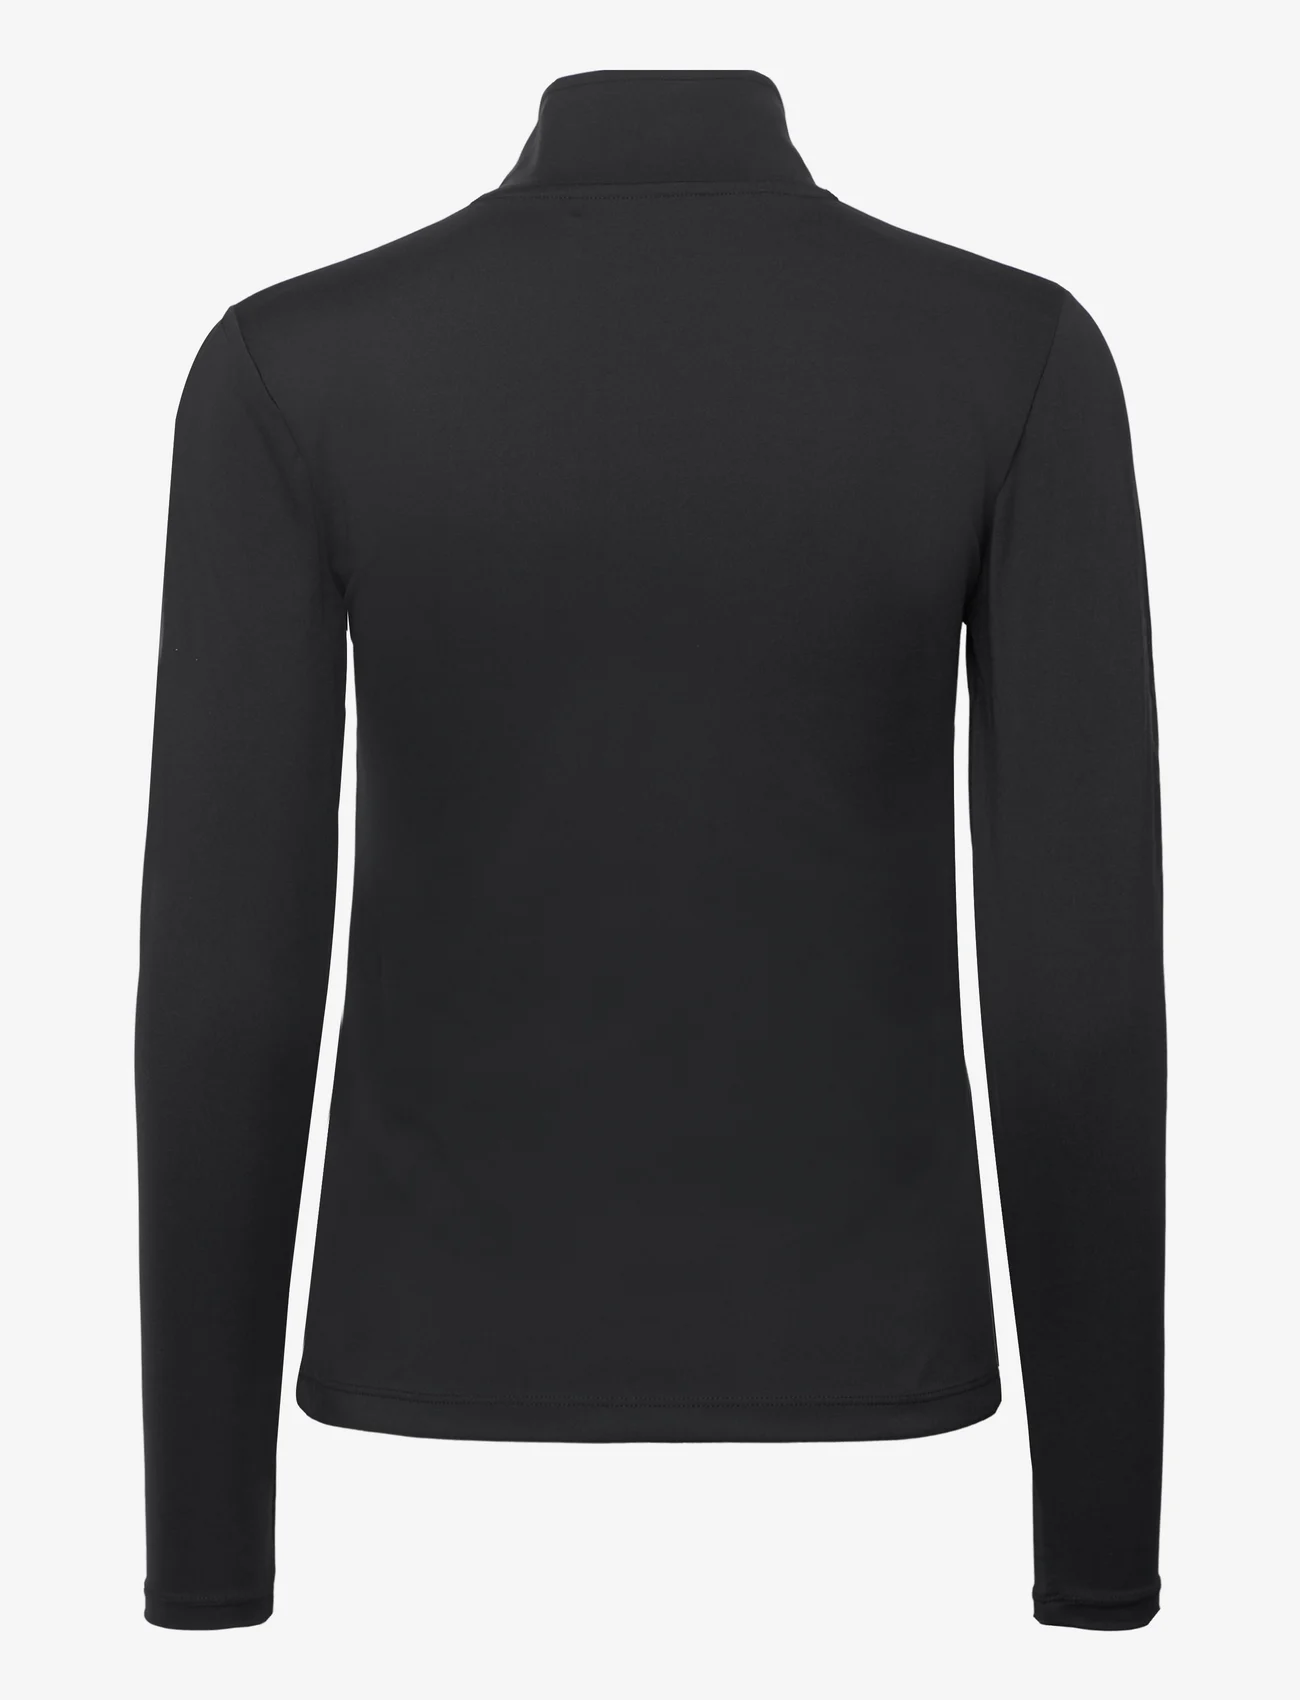 Sofie Schnoor - T-shirt long-sleeve - langærmede overdele - black - 1